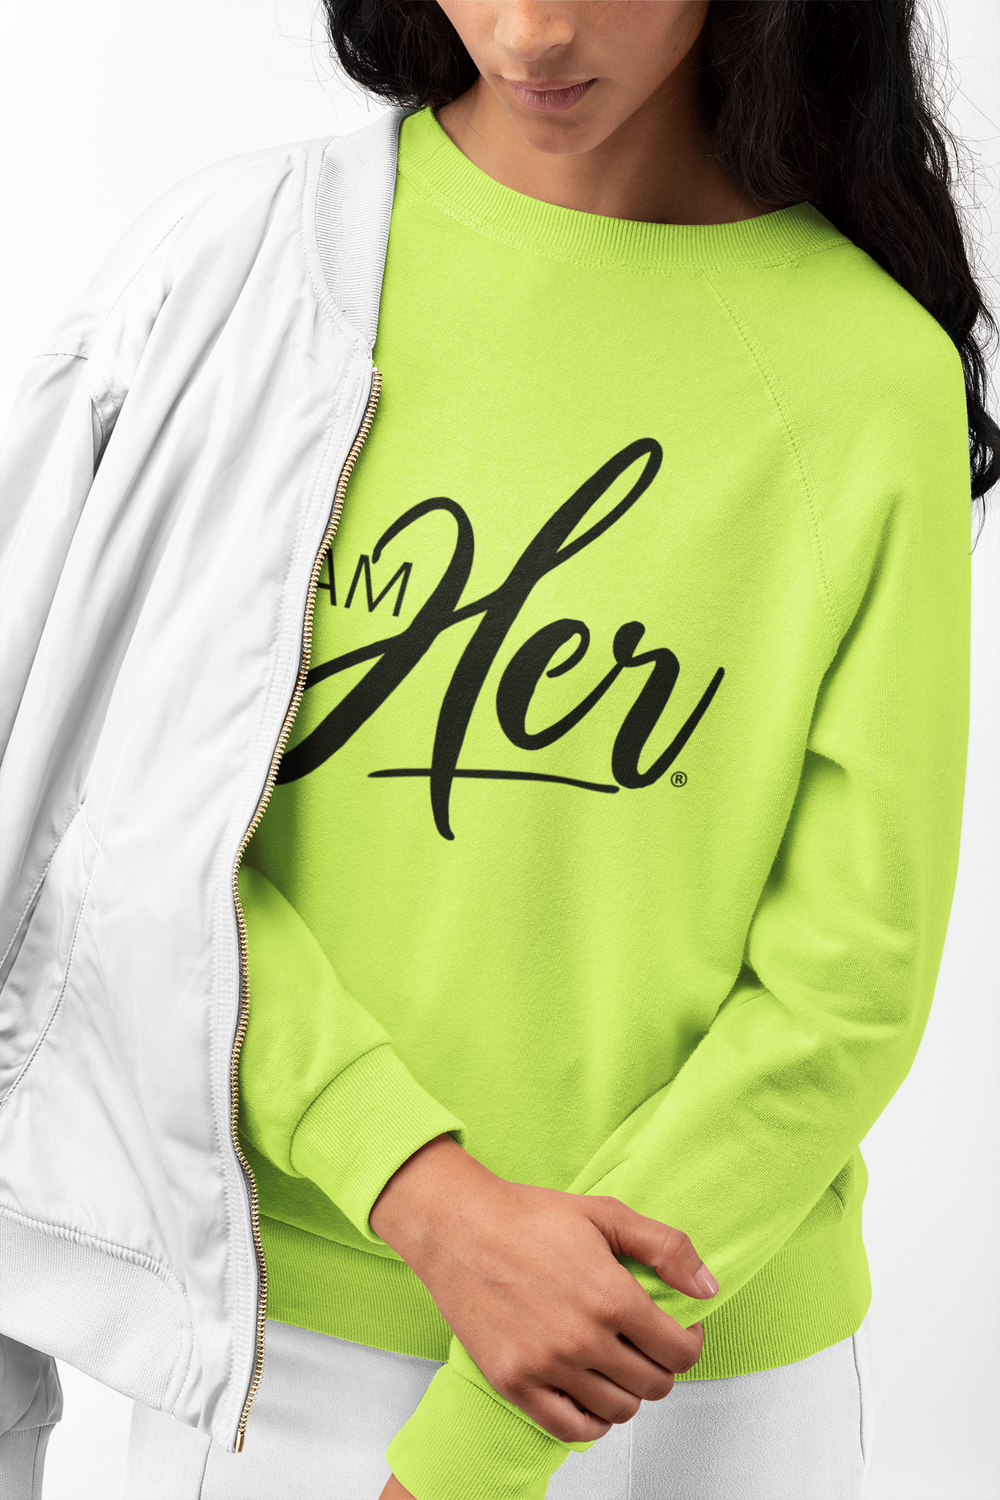 I AM HER Signature Women's Crewneck Sweater - Neon Green - I AM HER Apparel